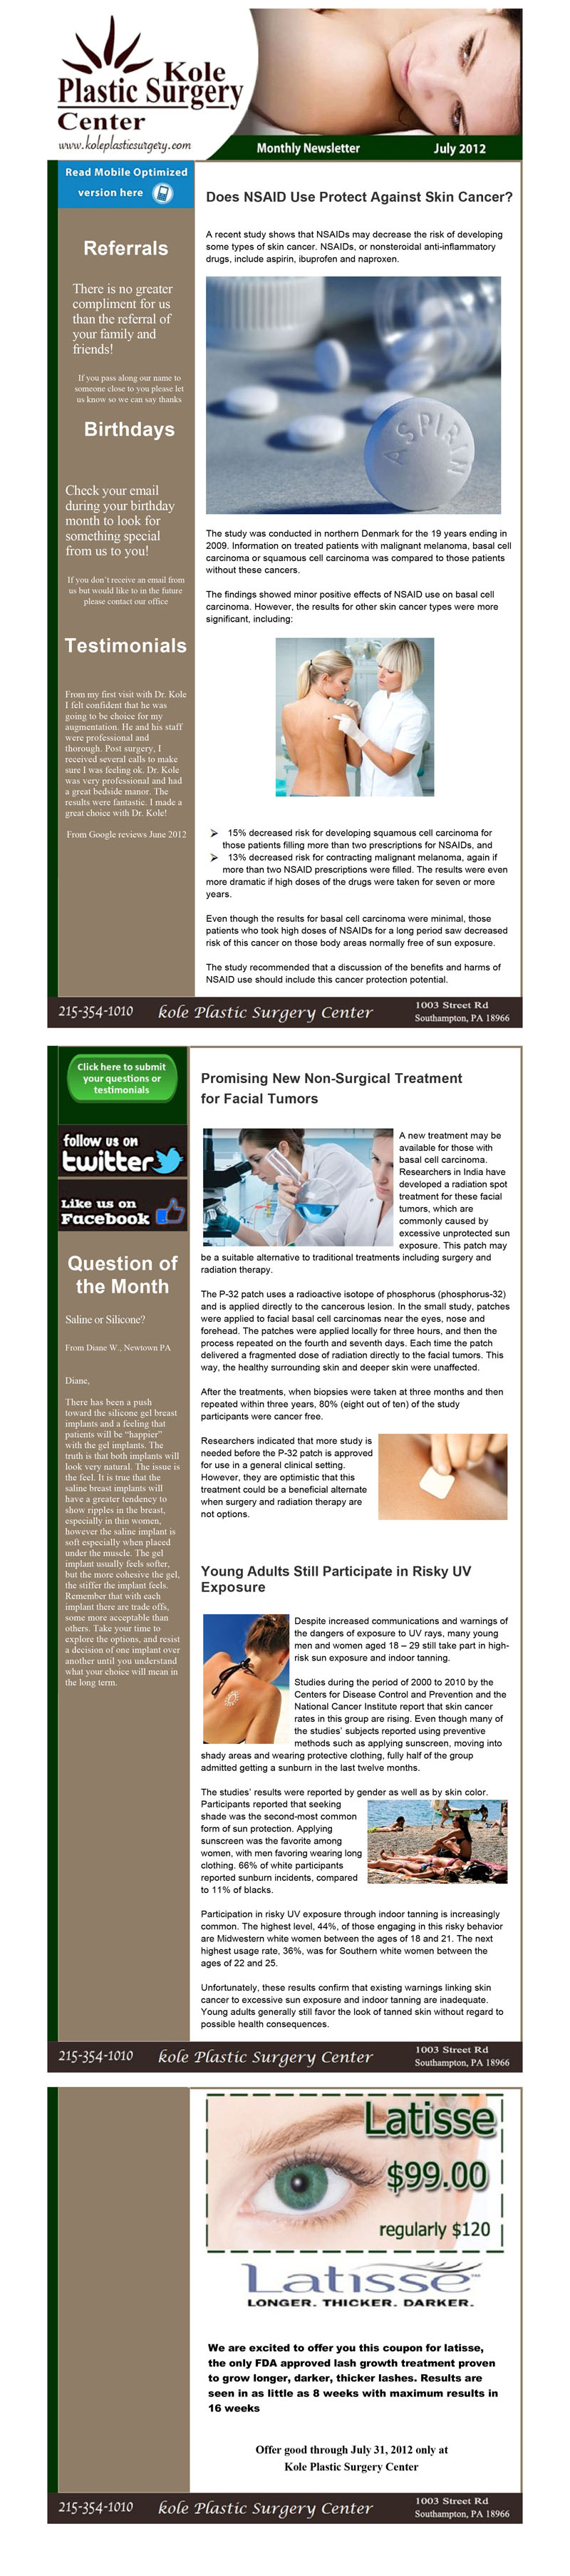 Dr. Kole July 2012 Newsletter